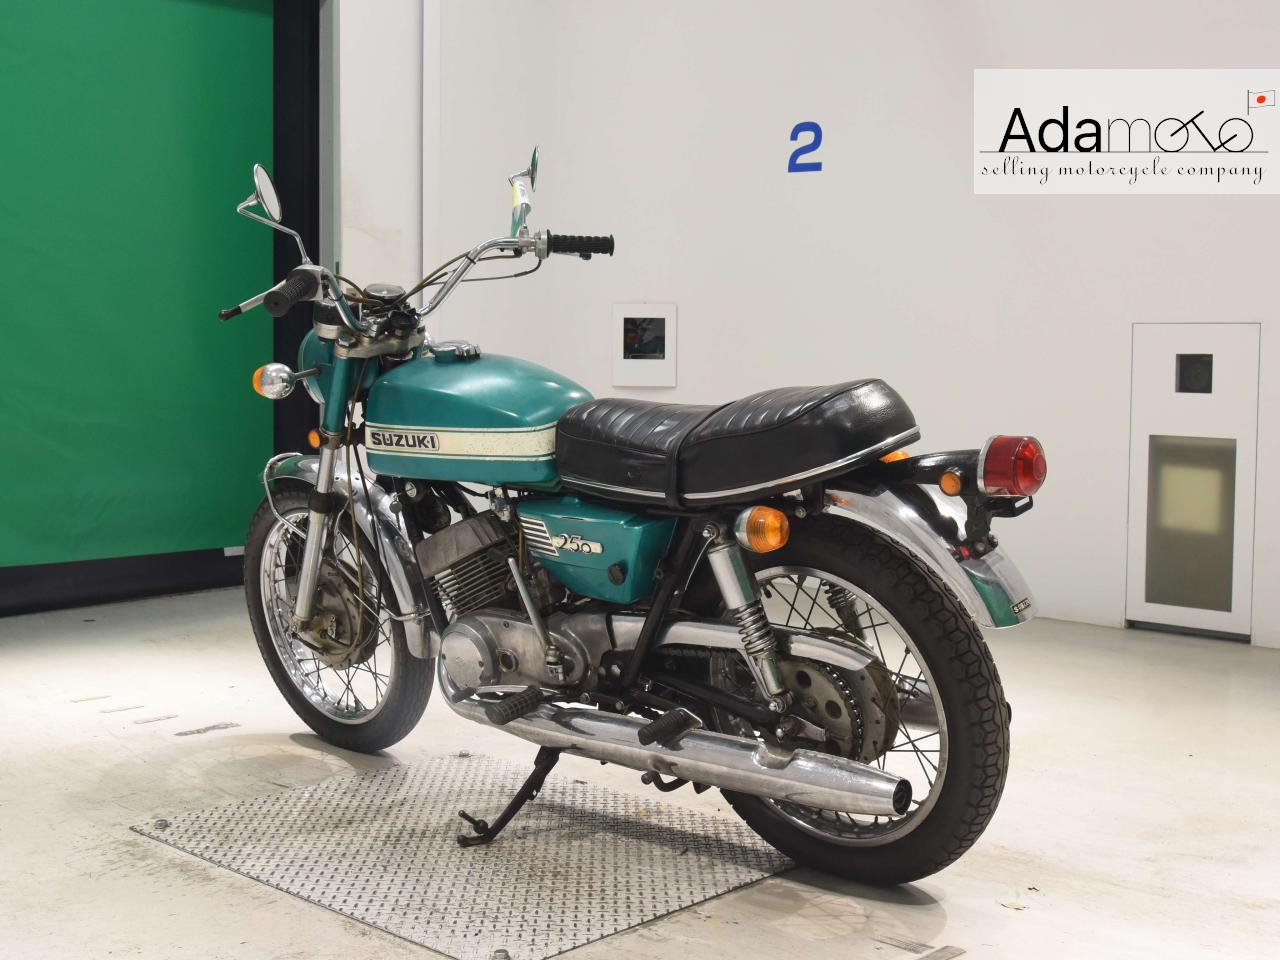 Suzuki T250 - Adamoto - Motorcycles from Japan